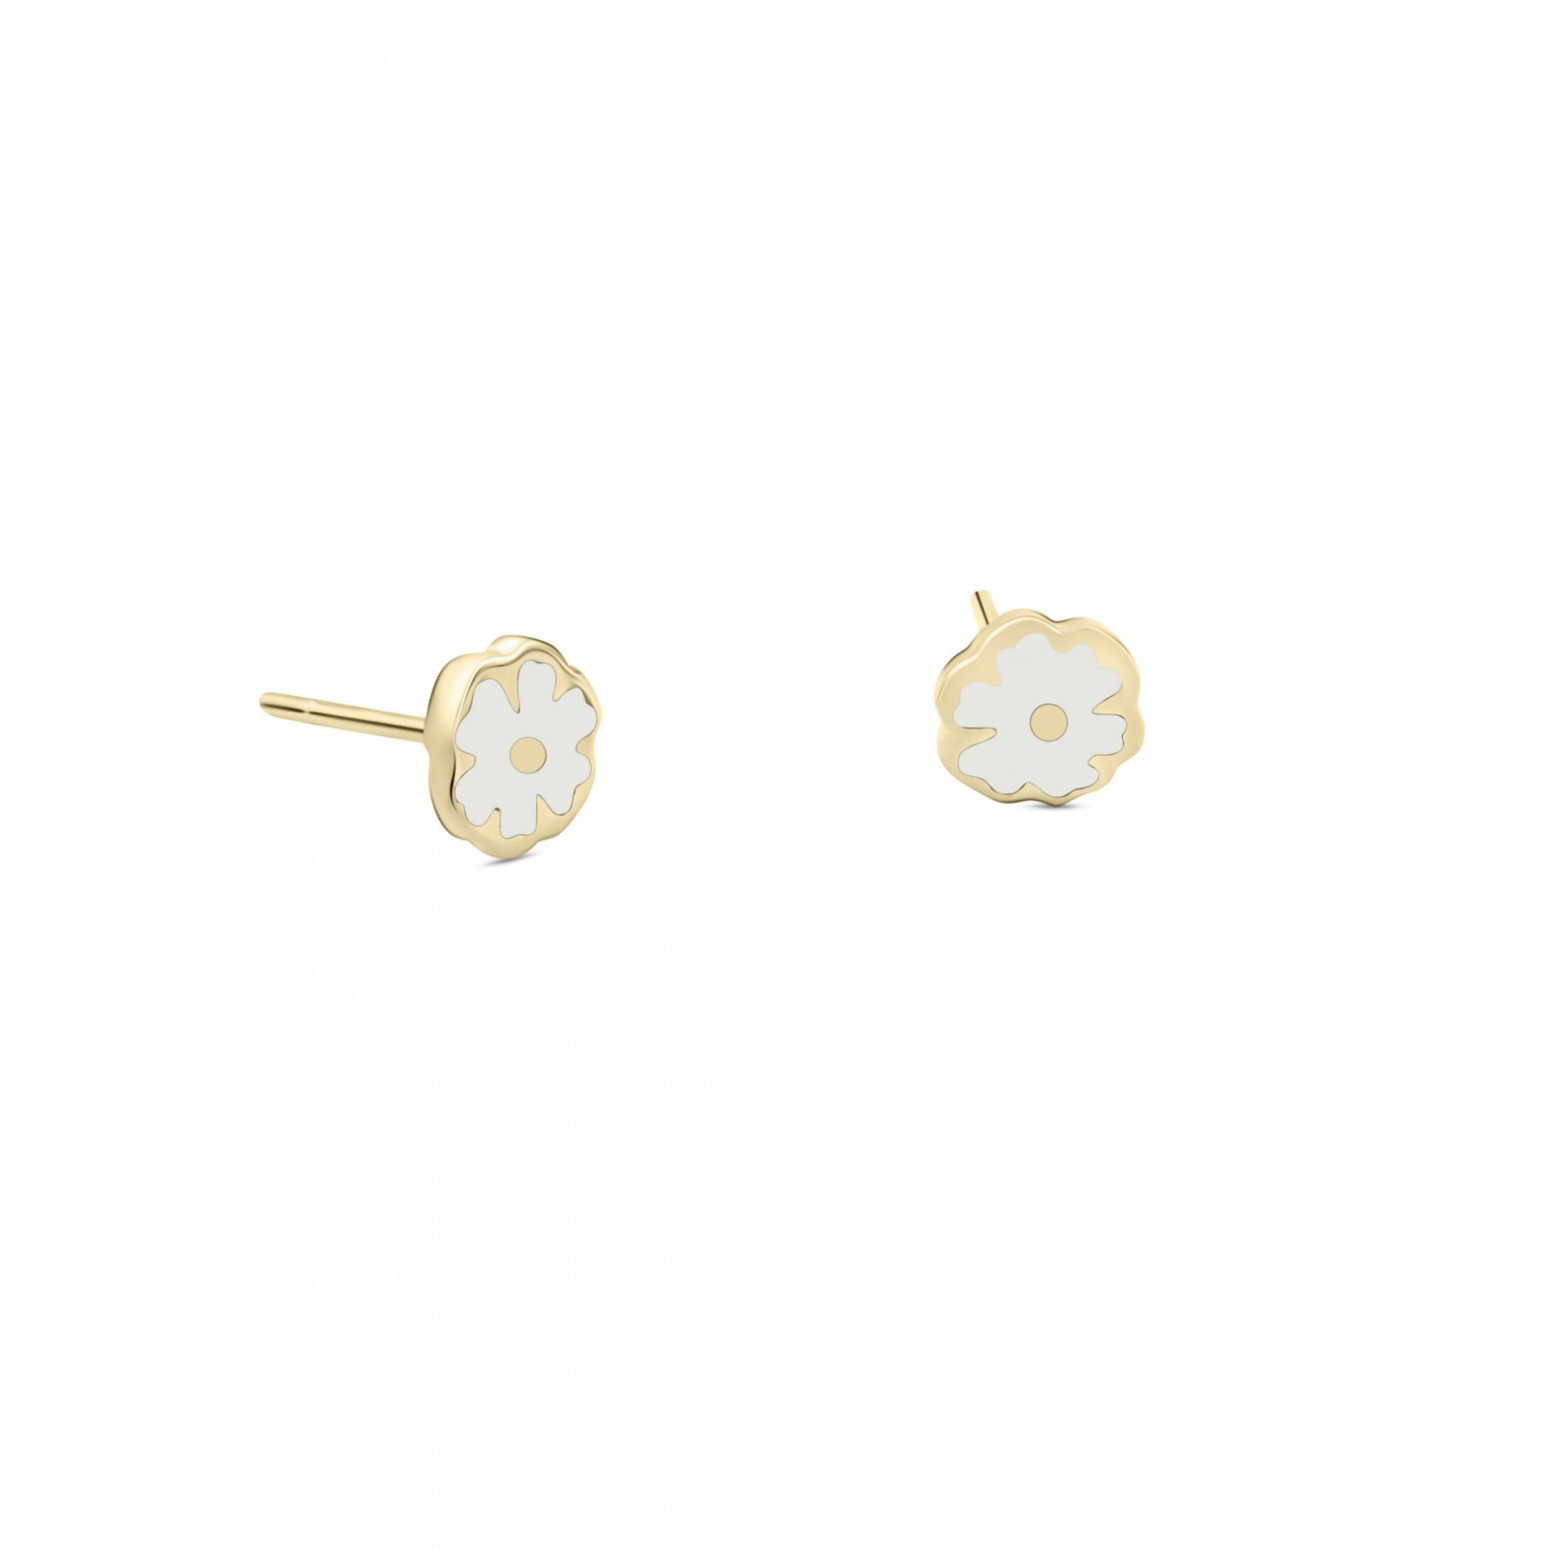 Flower baby earrings K9 gold with enamel, ps0153 EARRINGS Κοσμηματα - chrilia.gr